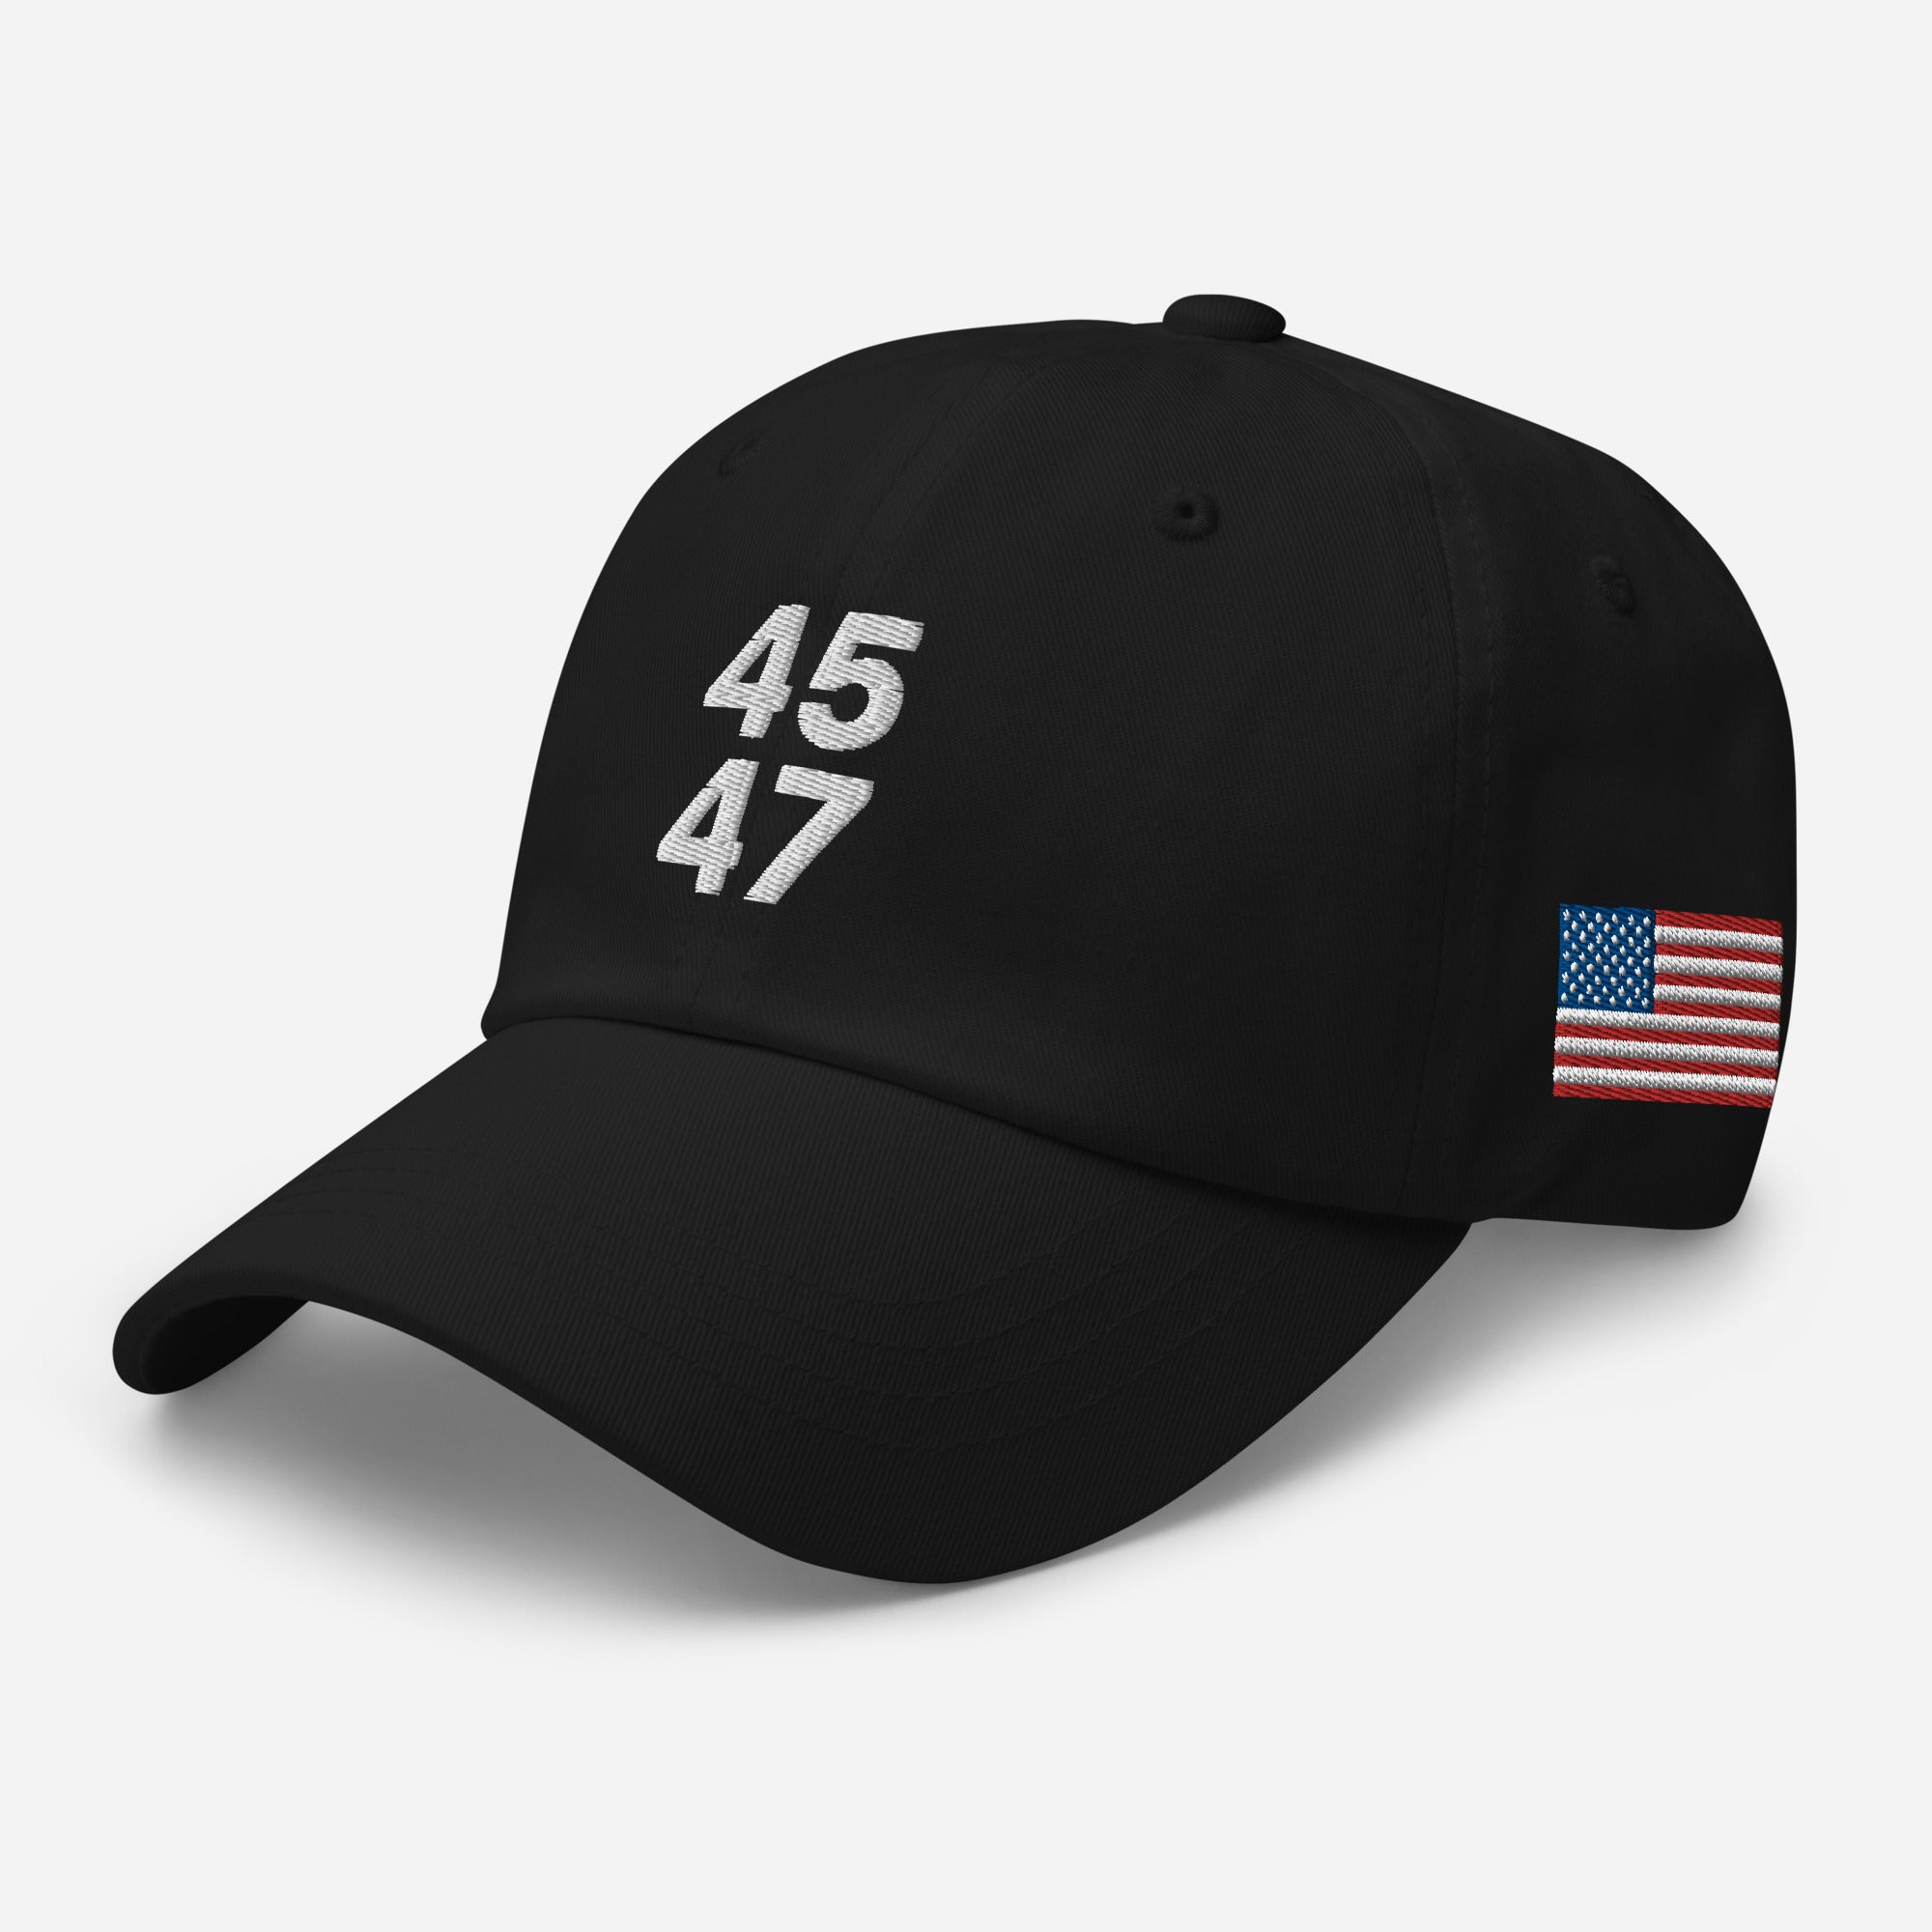 45 47 dad hat, 45 47 baseball cap, 45 47 trump hat, 45 Trump hat, Donald Trump 2024, 45 dad cap, Republican Gifts, 45 47 conservative gifts - Madeinsea©